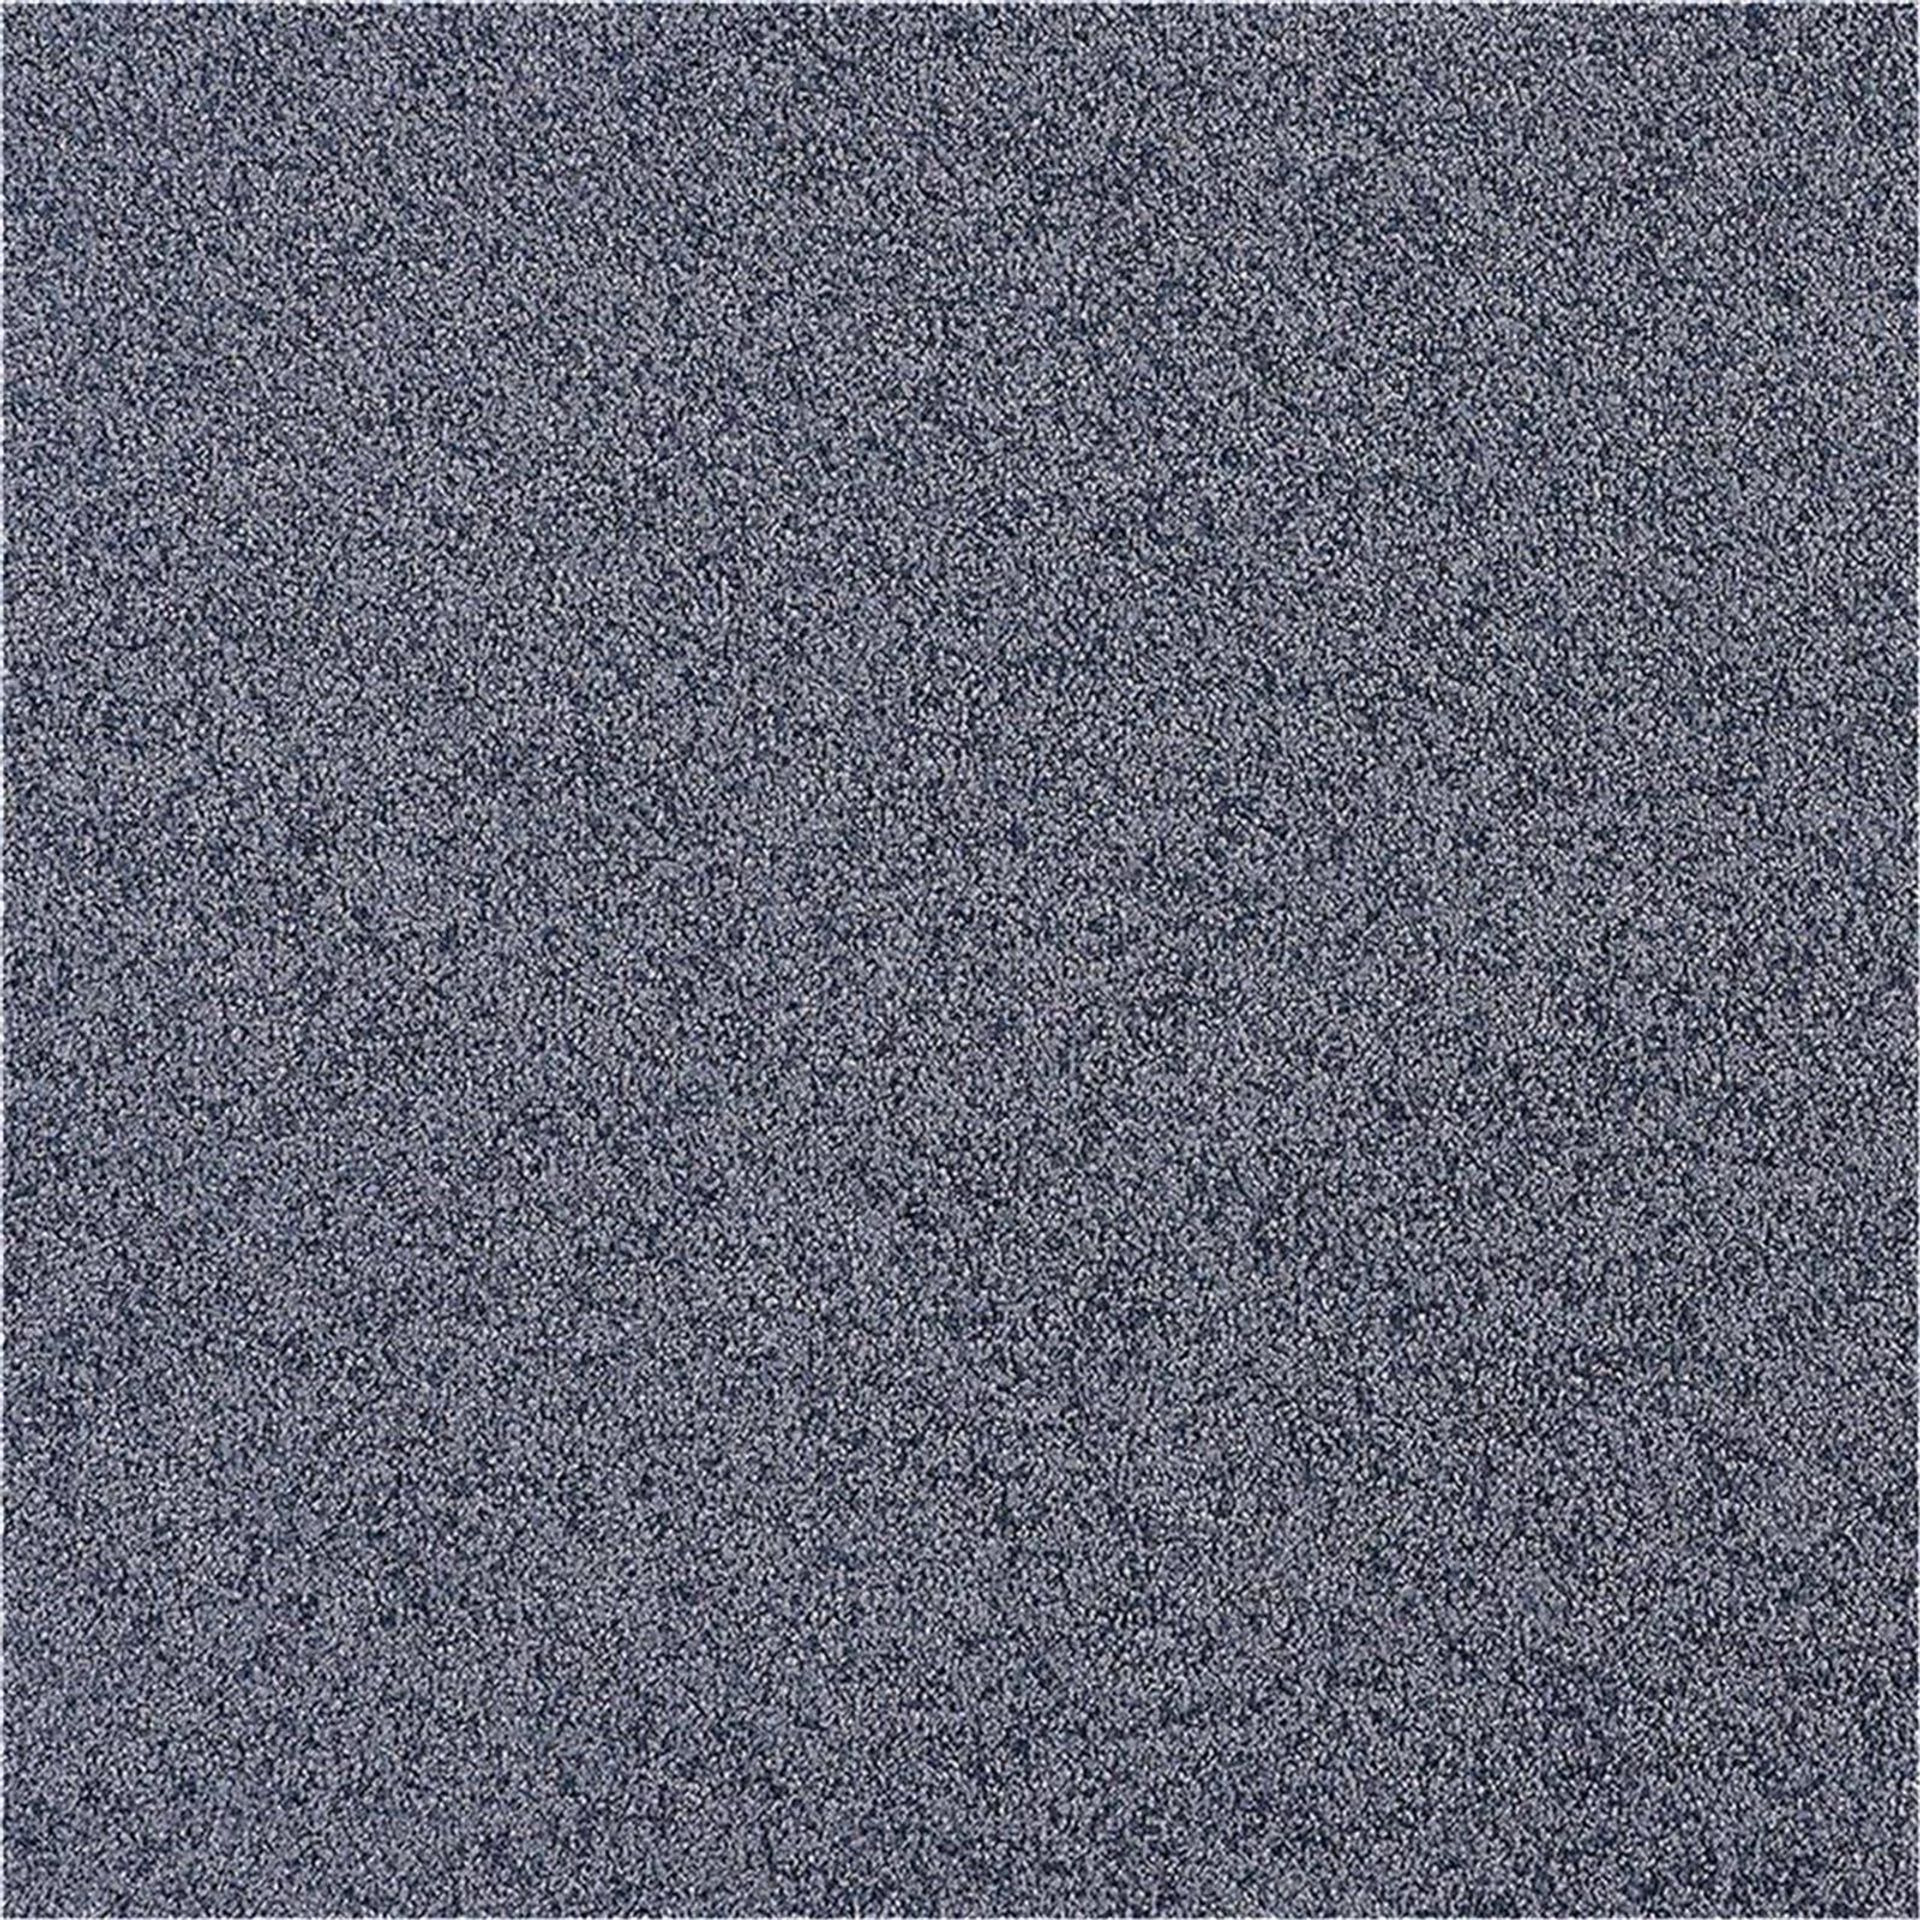 Teppichboden Infloor-Girloon Cashmere-Flair Frisé Blau 350 uni - Rollenbreite 400 cm